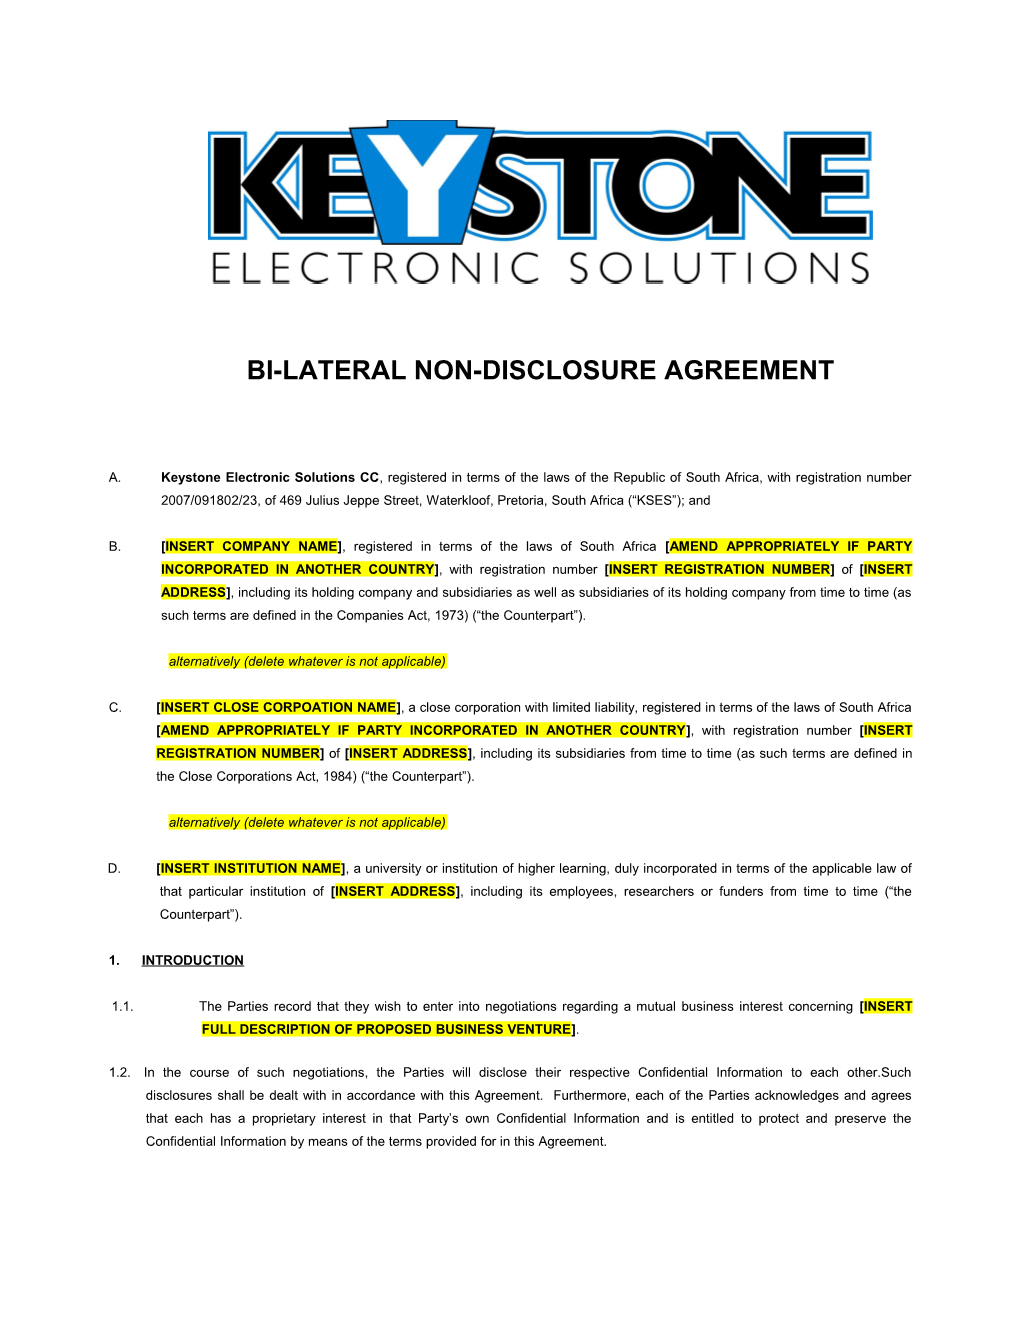 Standard Tellumat Bi-Lateral Non- Disclosure Agreement